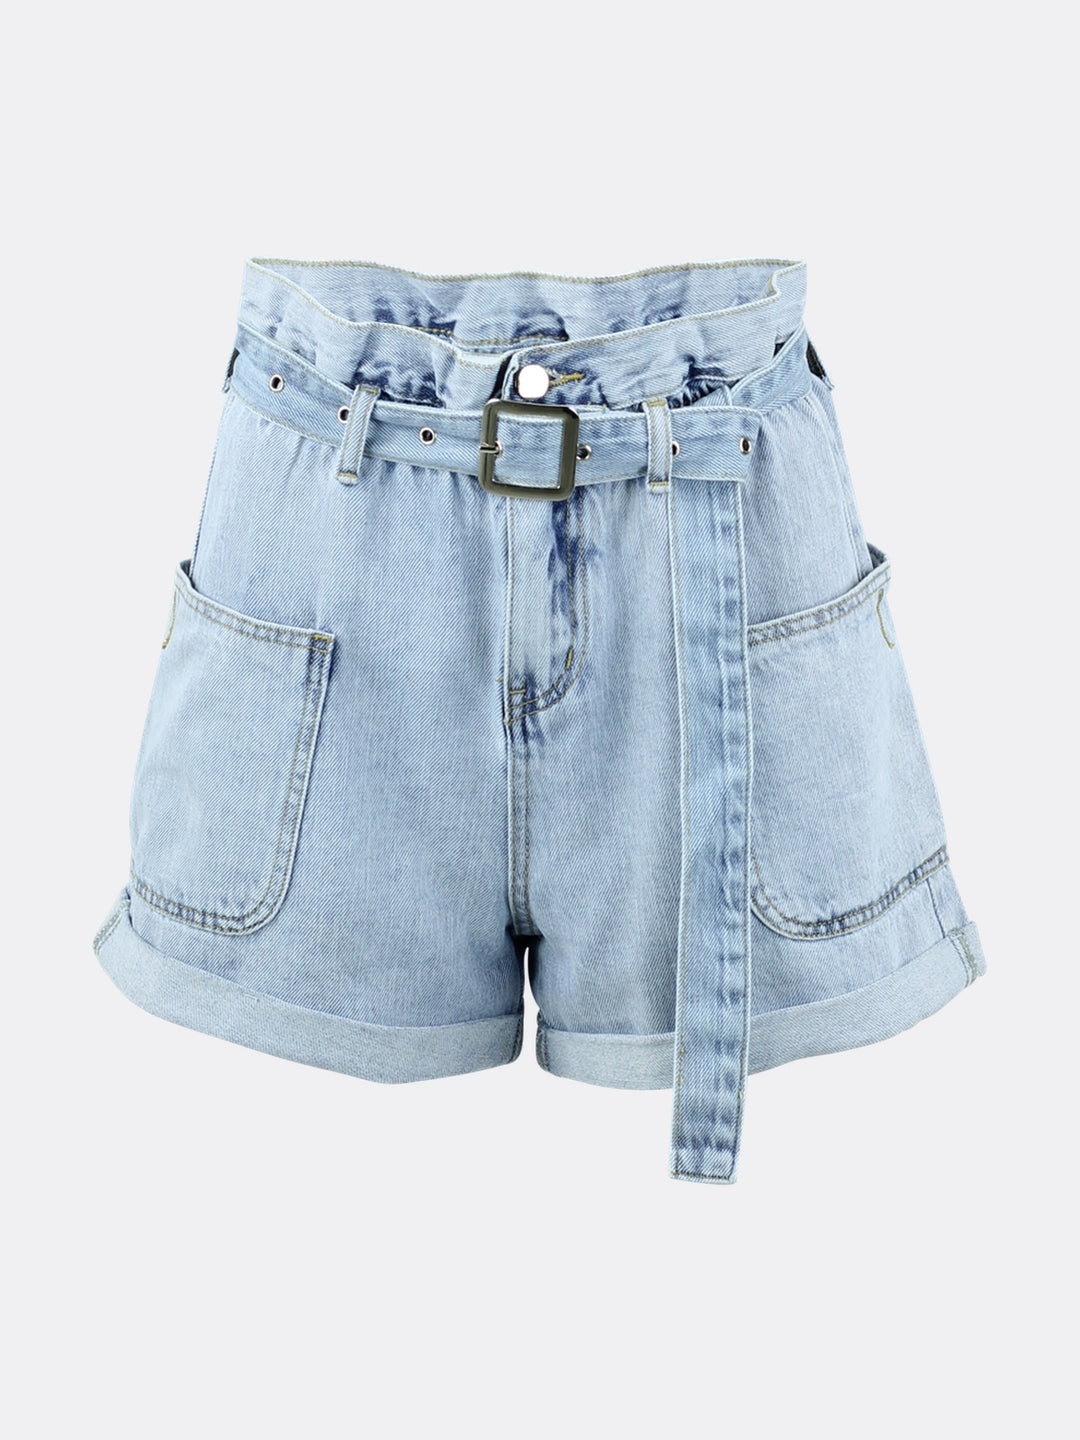 High Waist Denim Shorts with Matching Belt and Pocket Details Blue Ghost